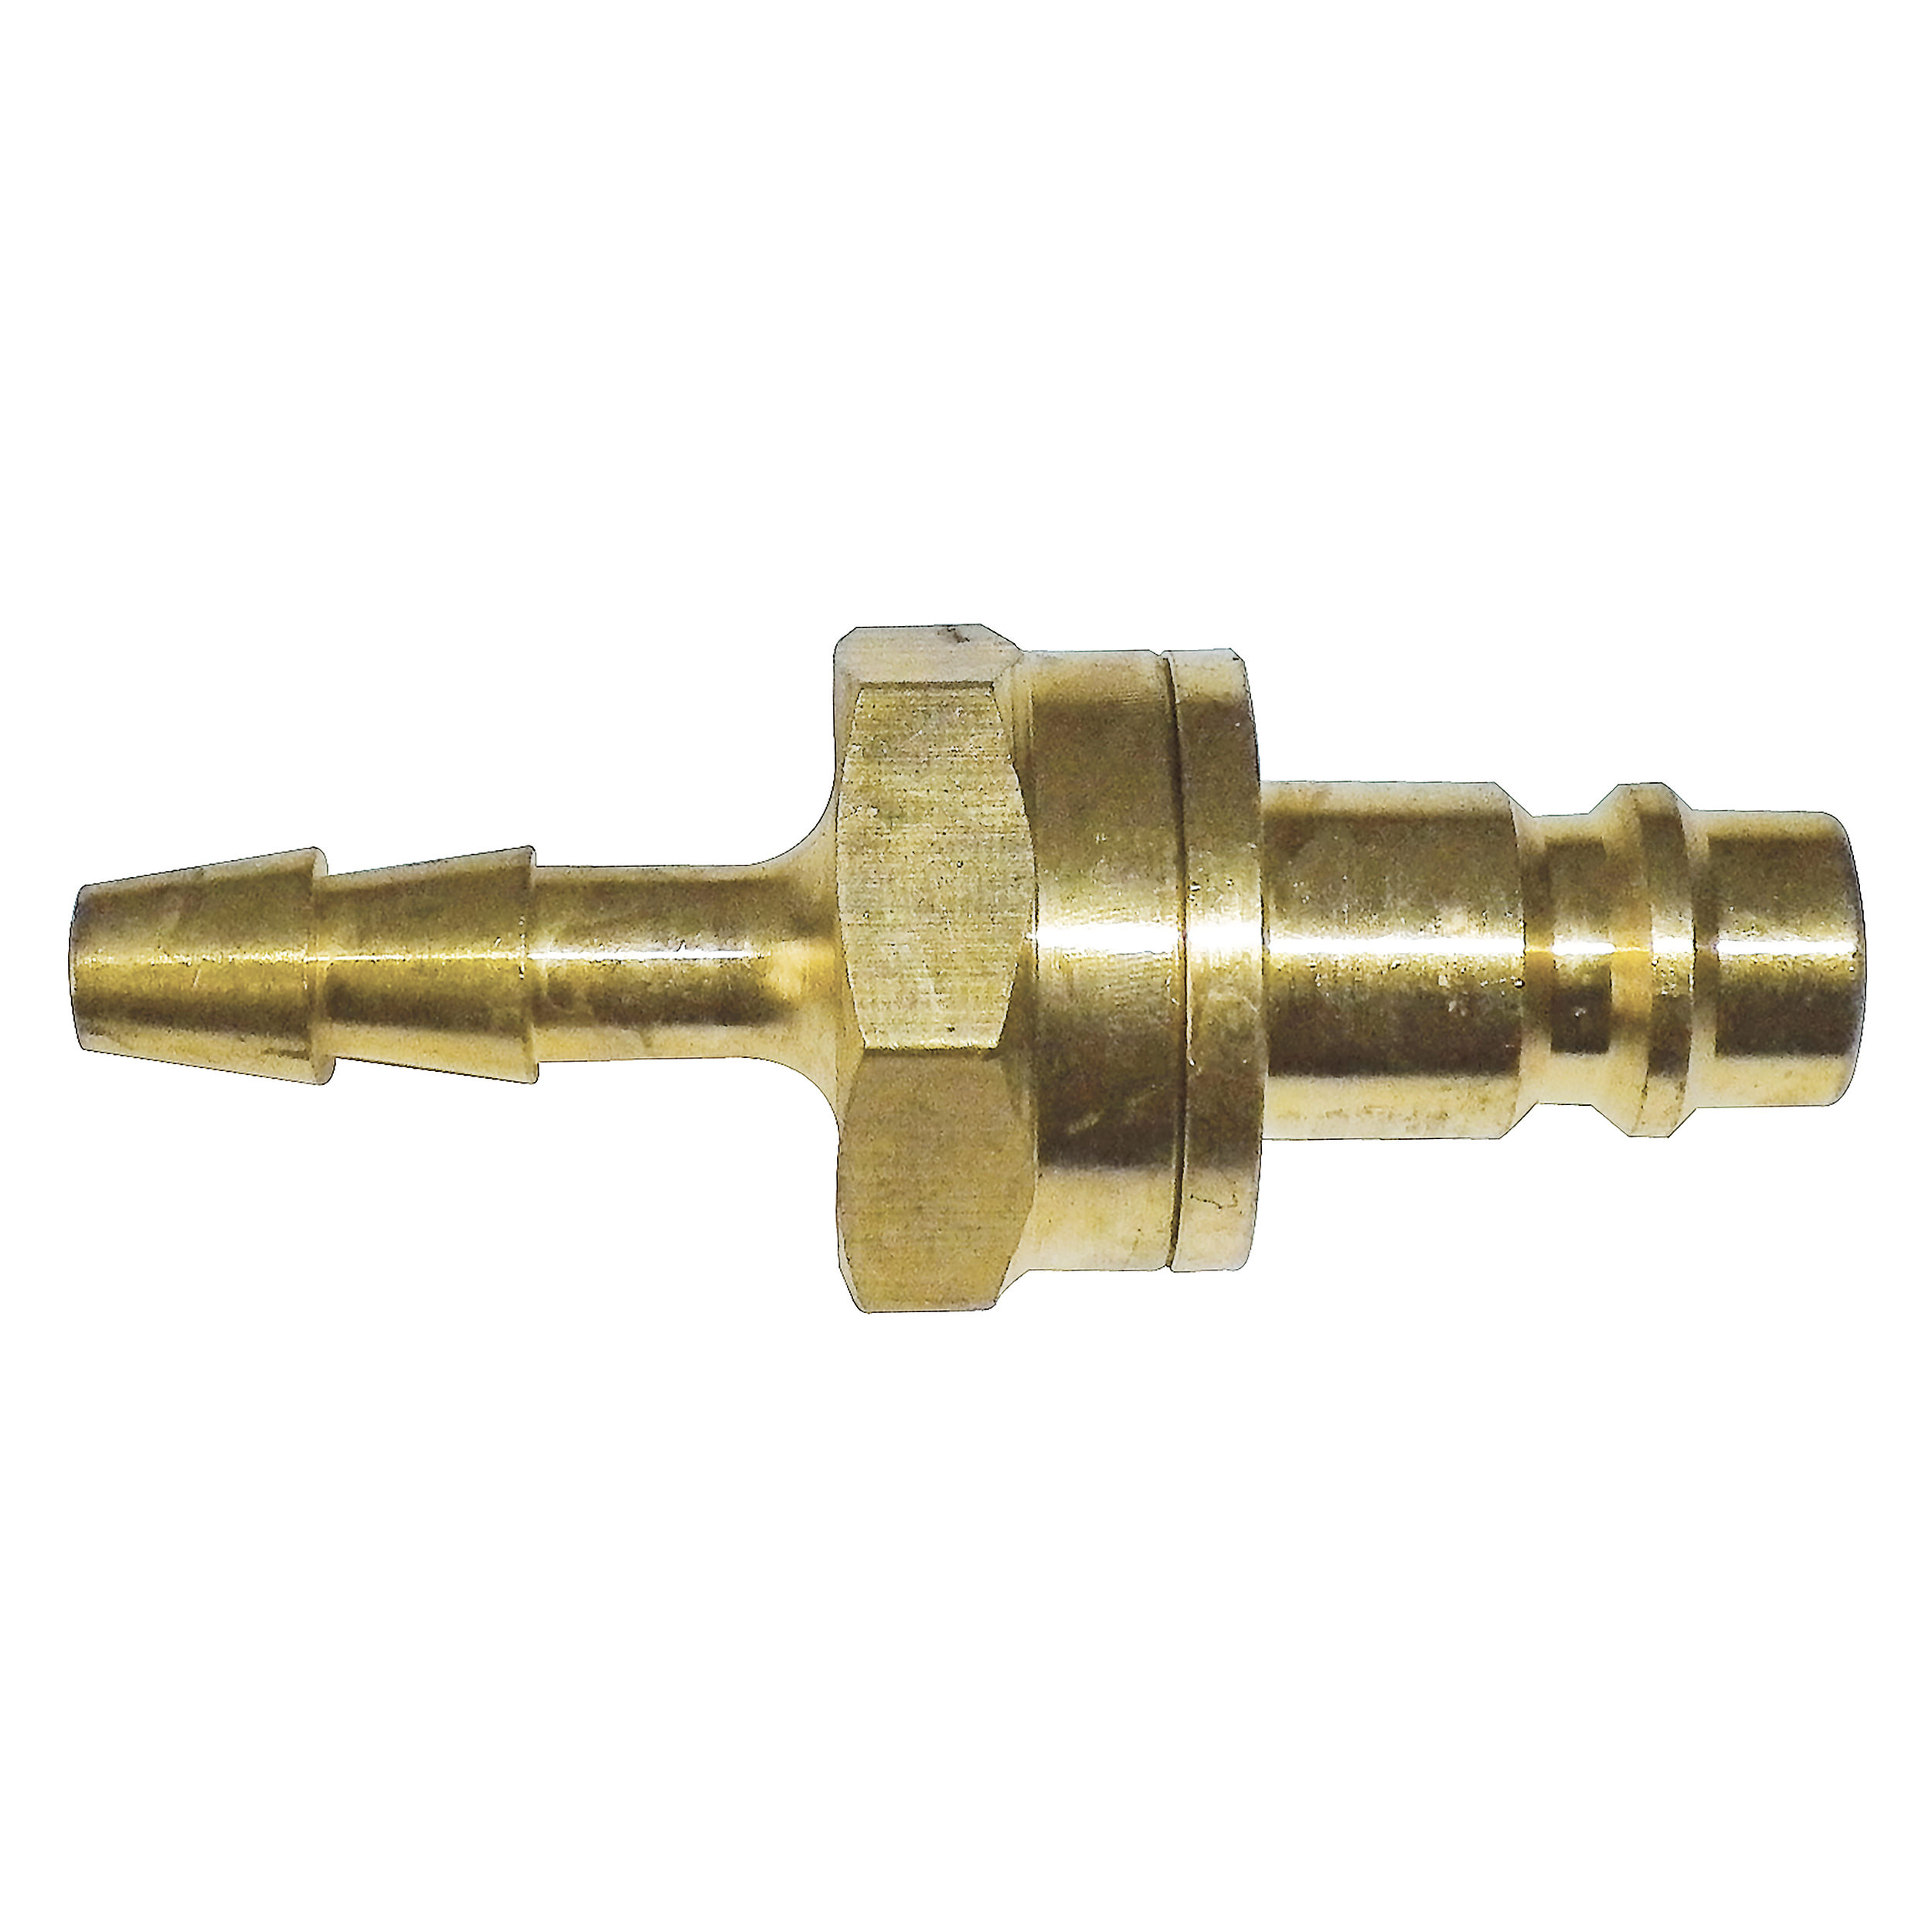 DN 7.2 plug w. Euro profile, both-way locking, QN 675 Nl/min, MOP: 232 psi, hose nozzle DN 6, length: 59 mm, AF 21